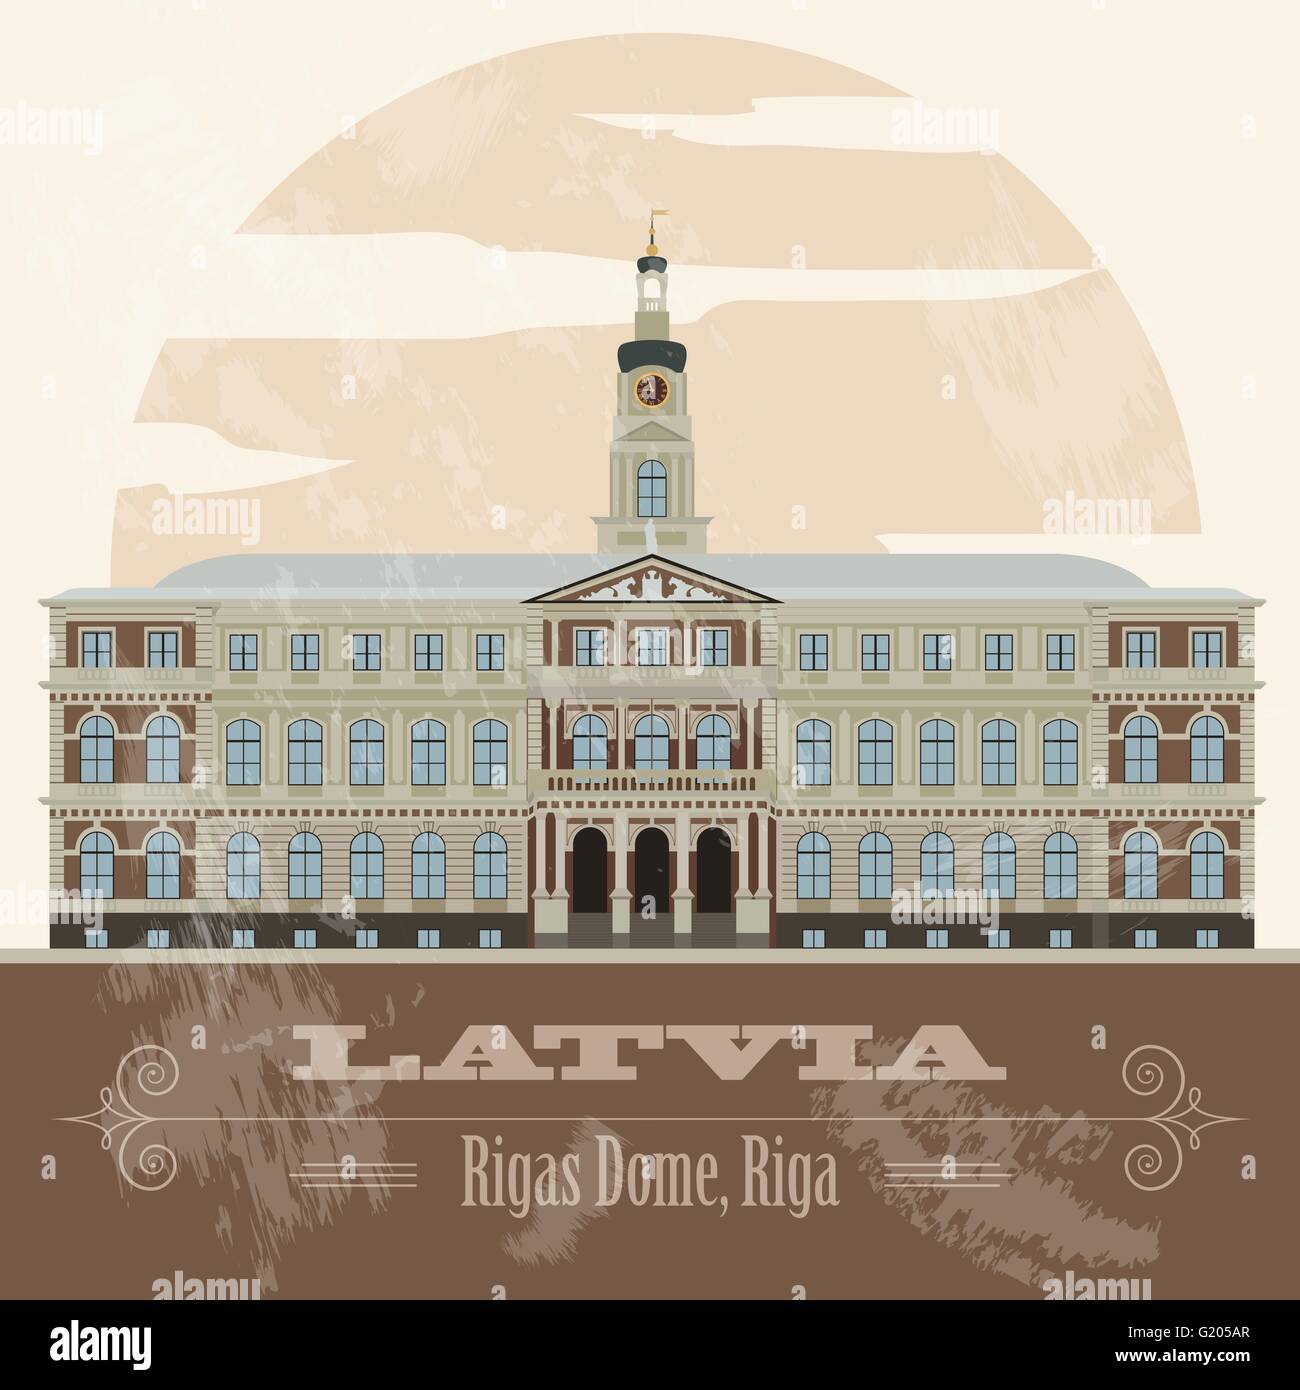 Latvia landmarks. Retro styled image. Vector illustration Stock Vector